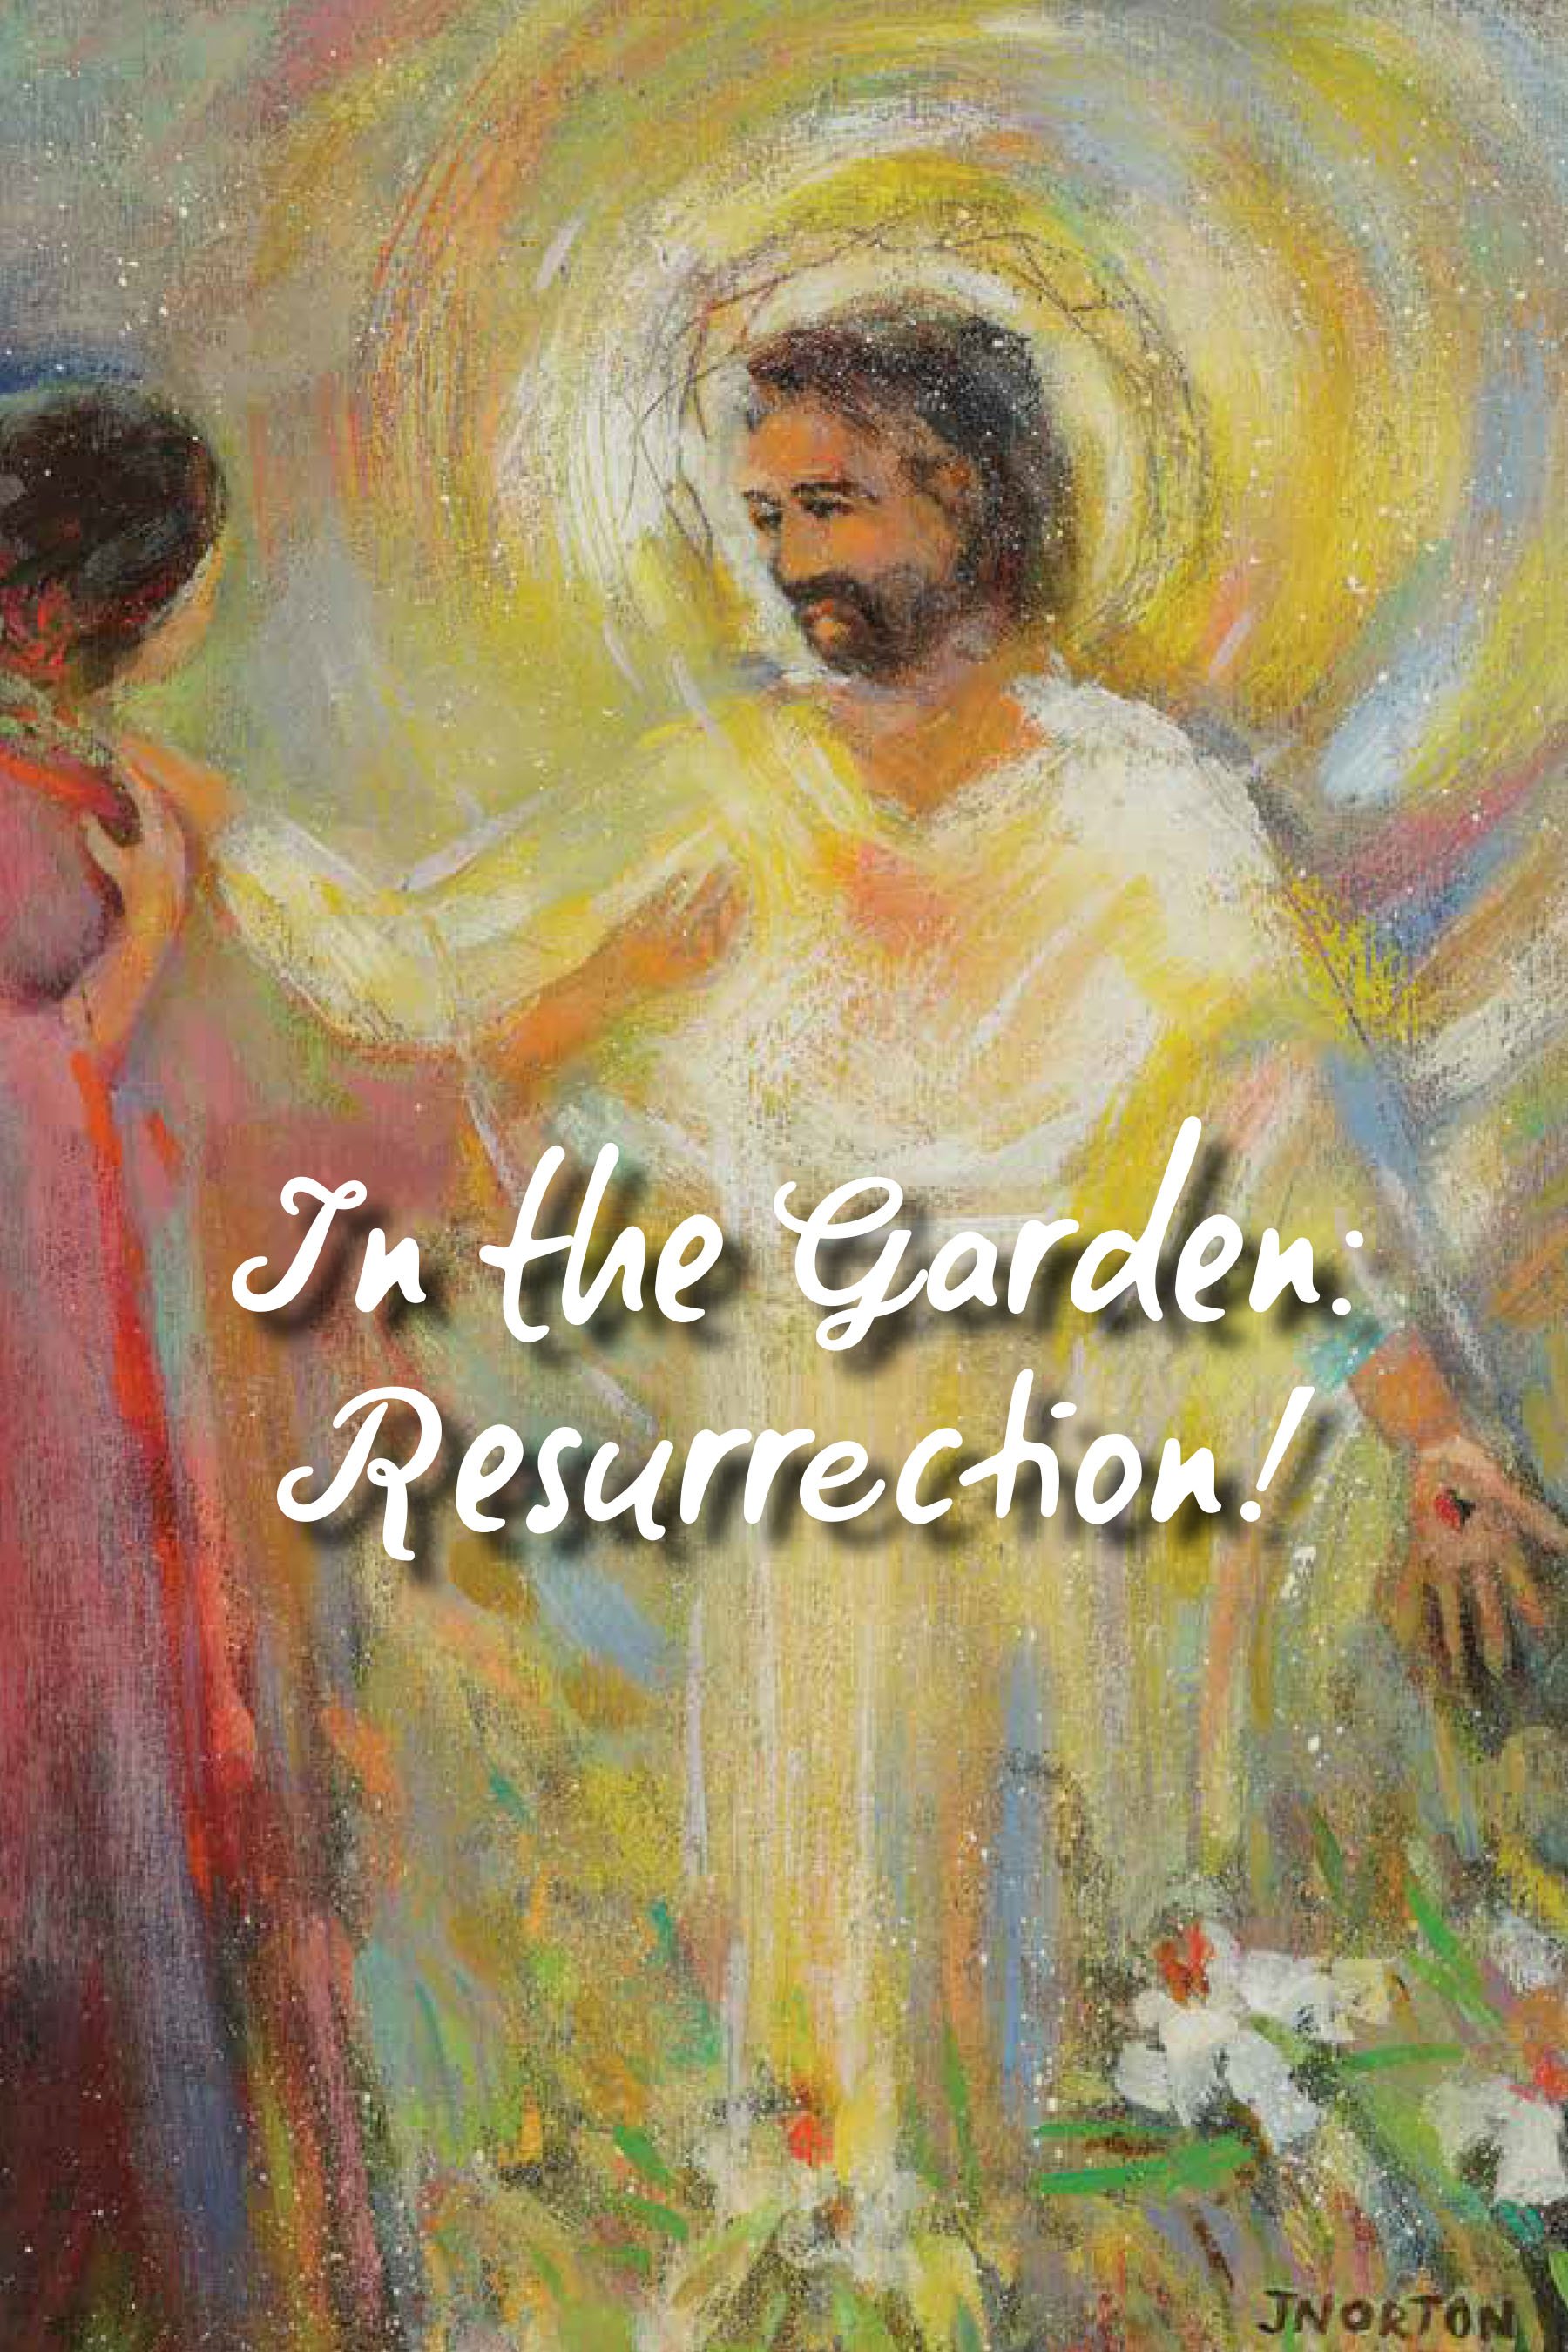 Resurrected Christ embracing an apostle